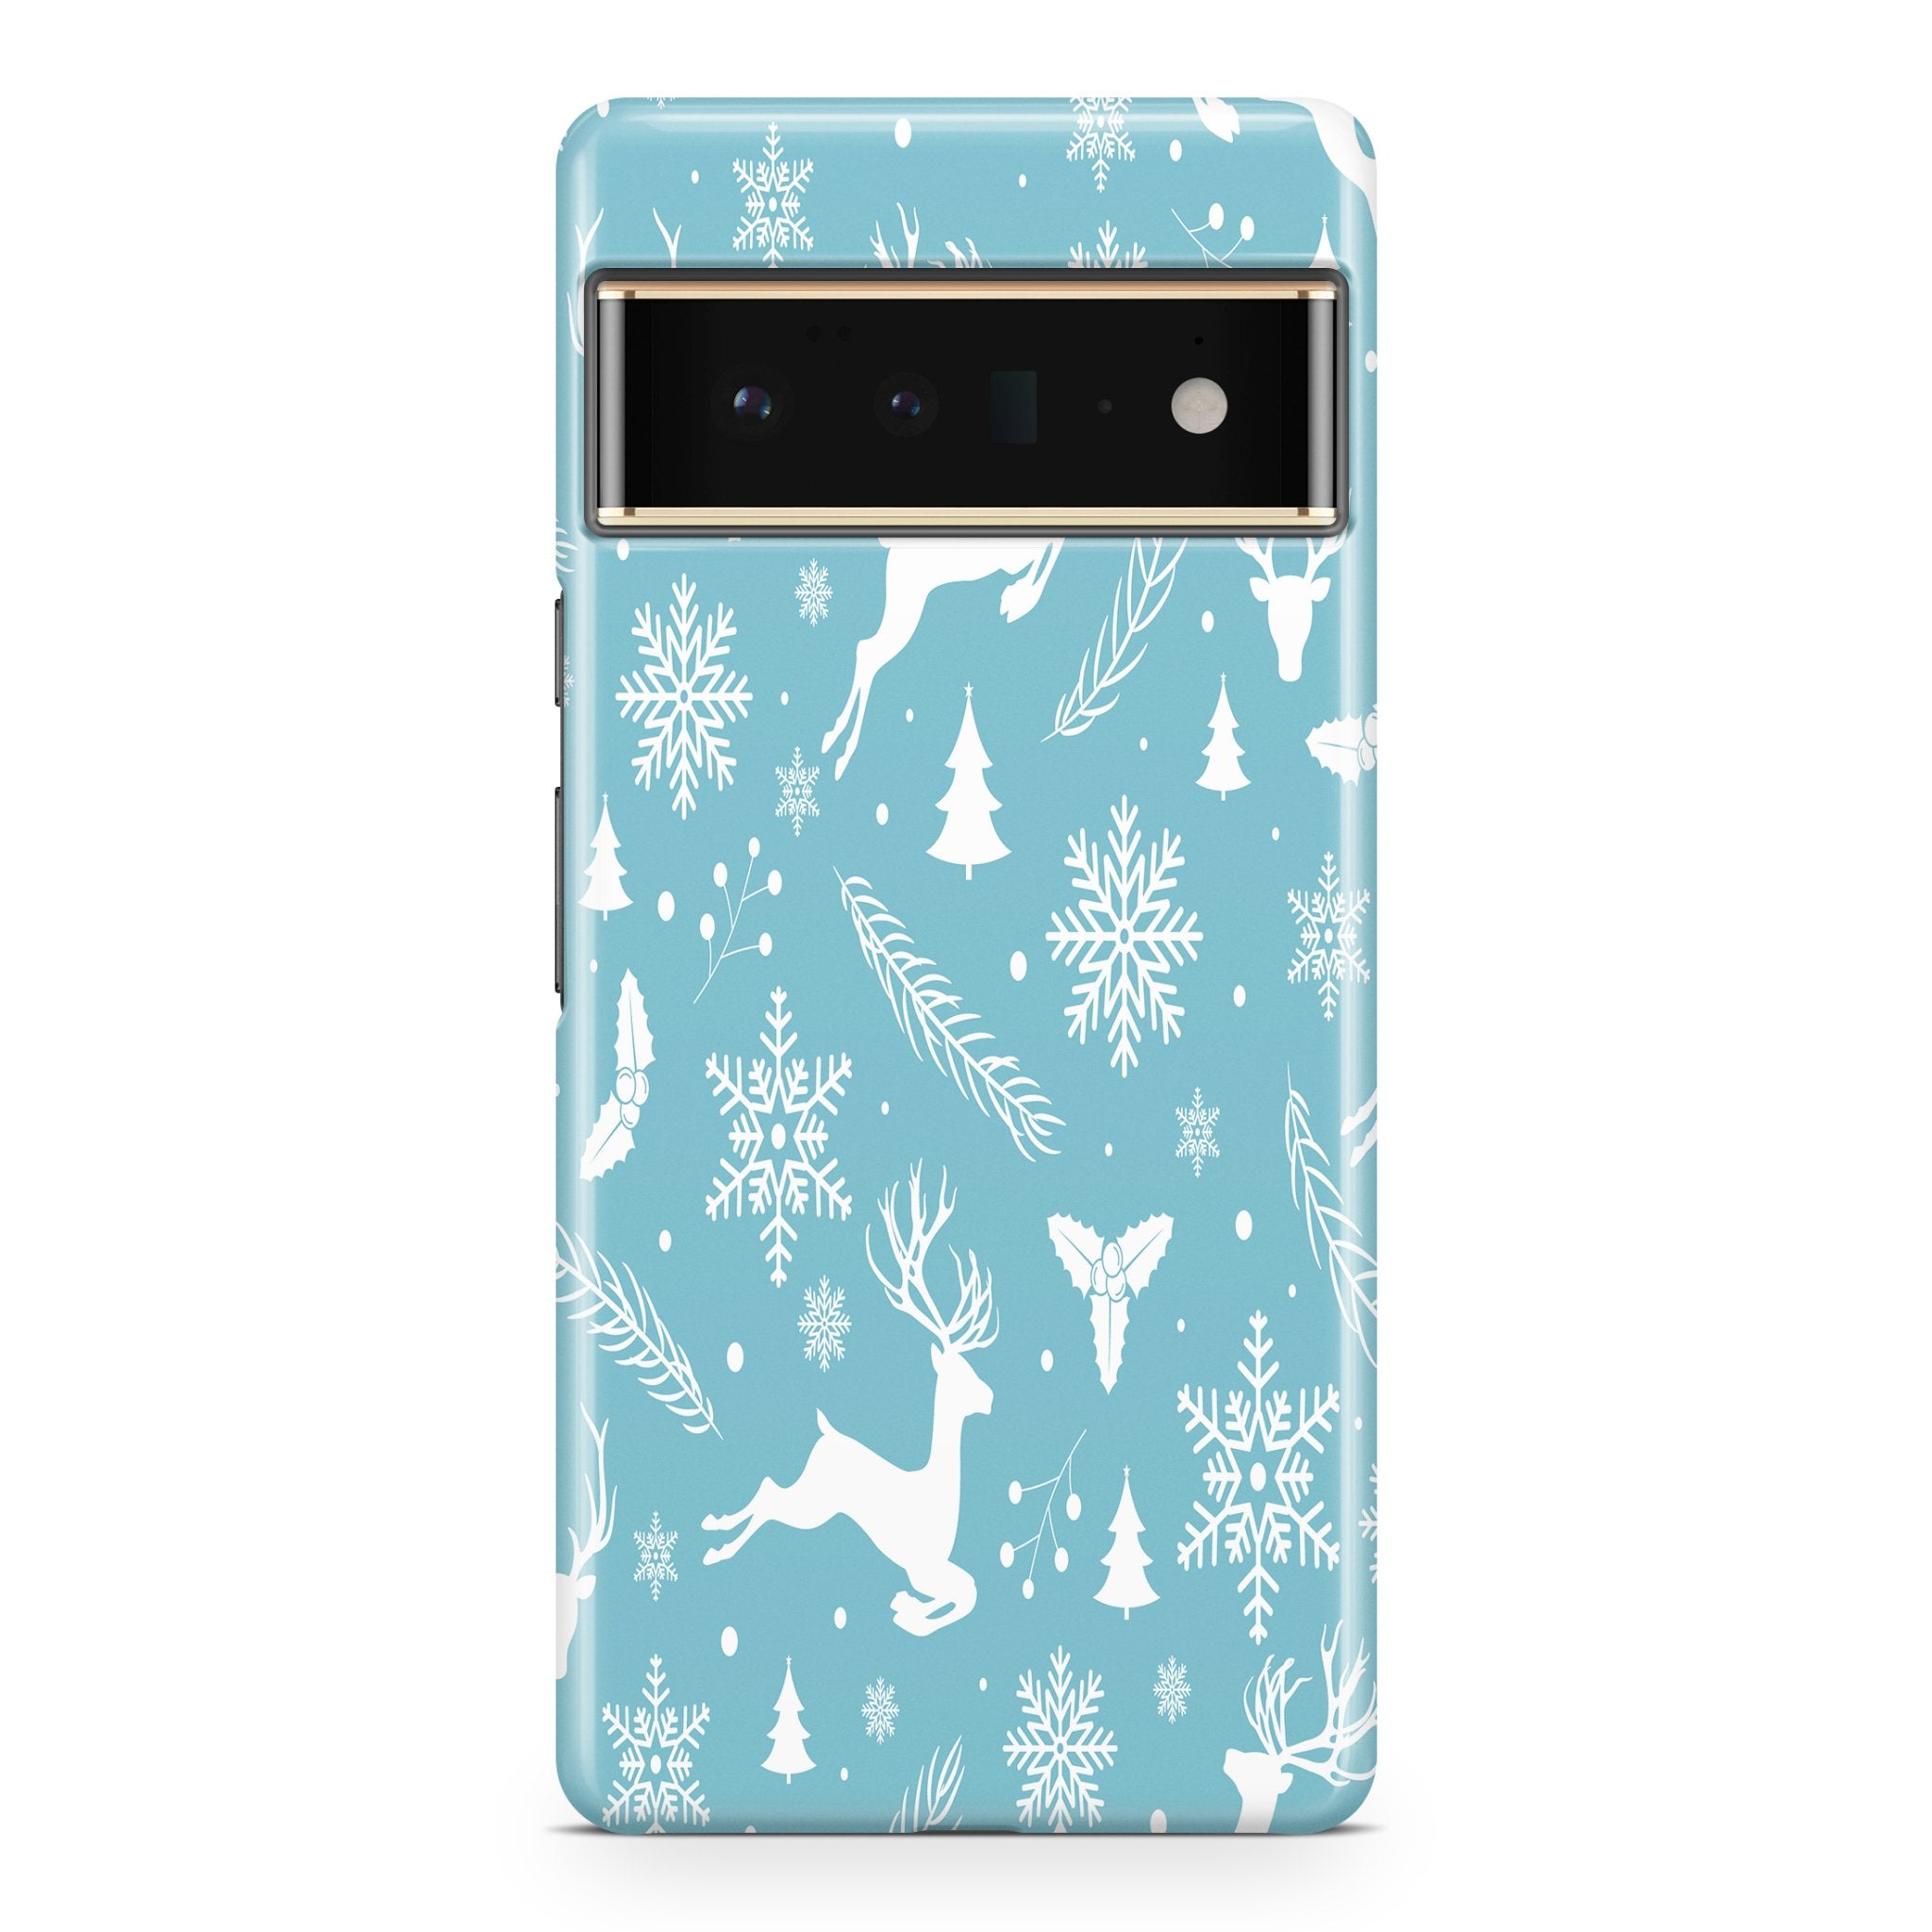 Winter Wonderland - Google phone case designs by CaseSwagger